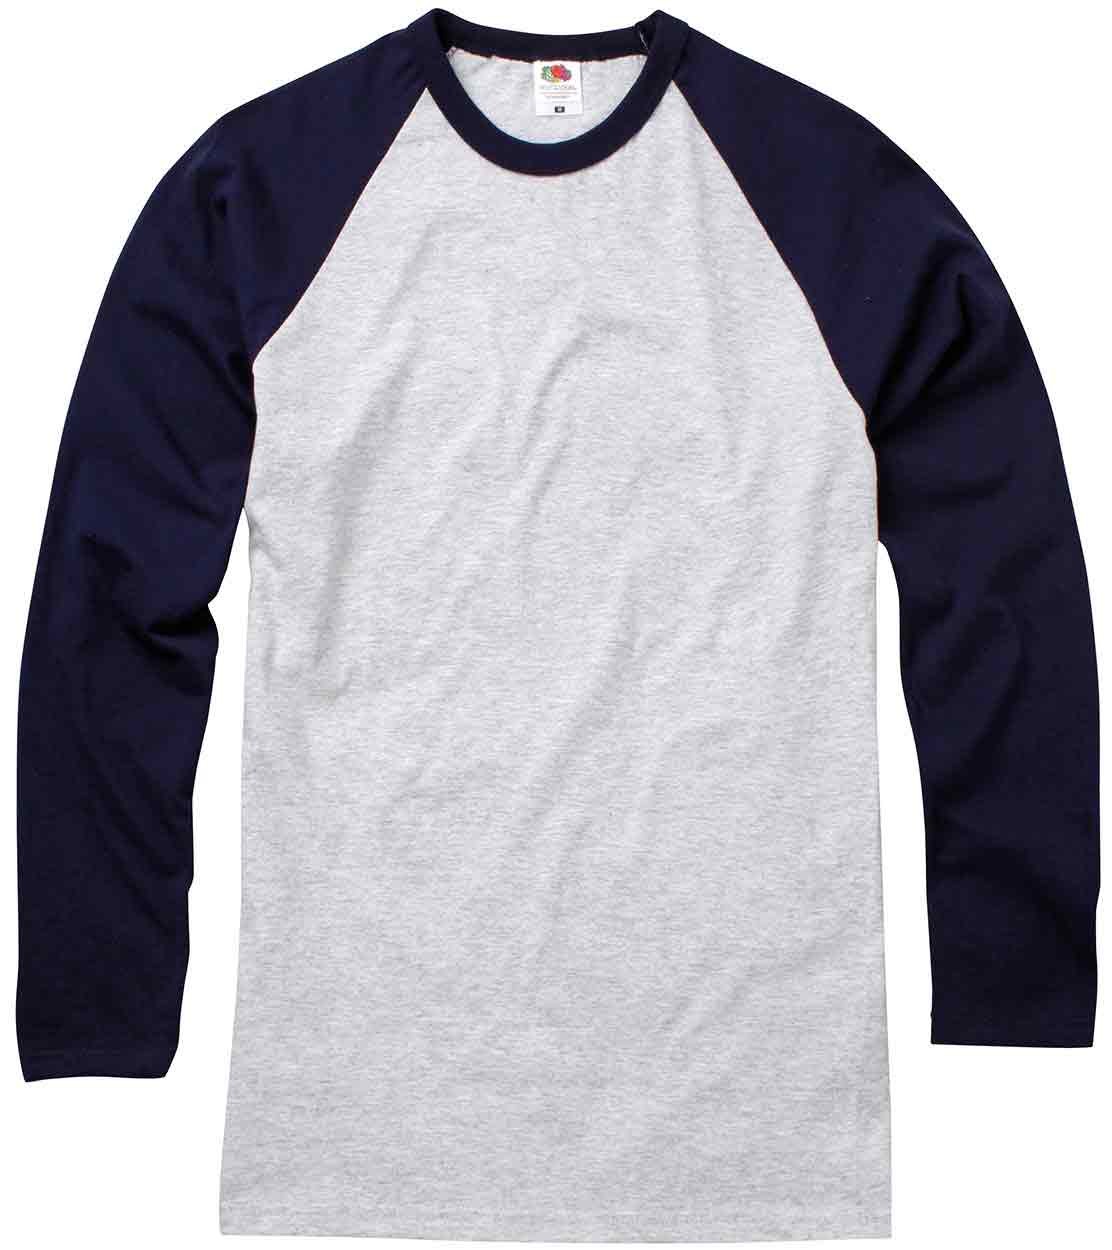 Fruit of the Loom SS32 Baseball Long Sleeve T - Mens Long Sleeve T-Shirts -  Unisex / Men's T Shirt Alternatives - Unisex / Men's T Shirts - T Shirts -  Leisurewear - Best Workwear